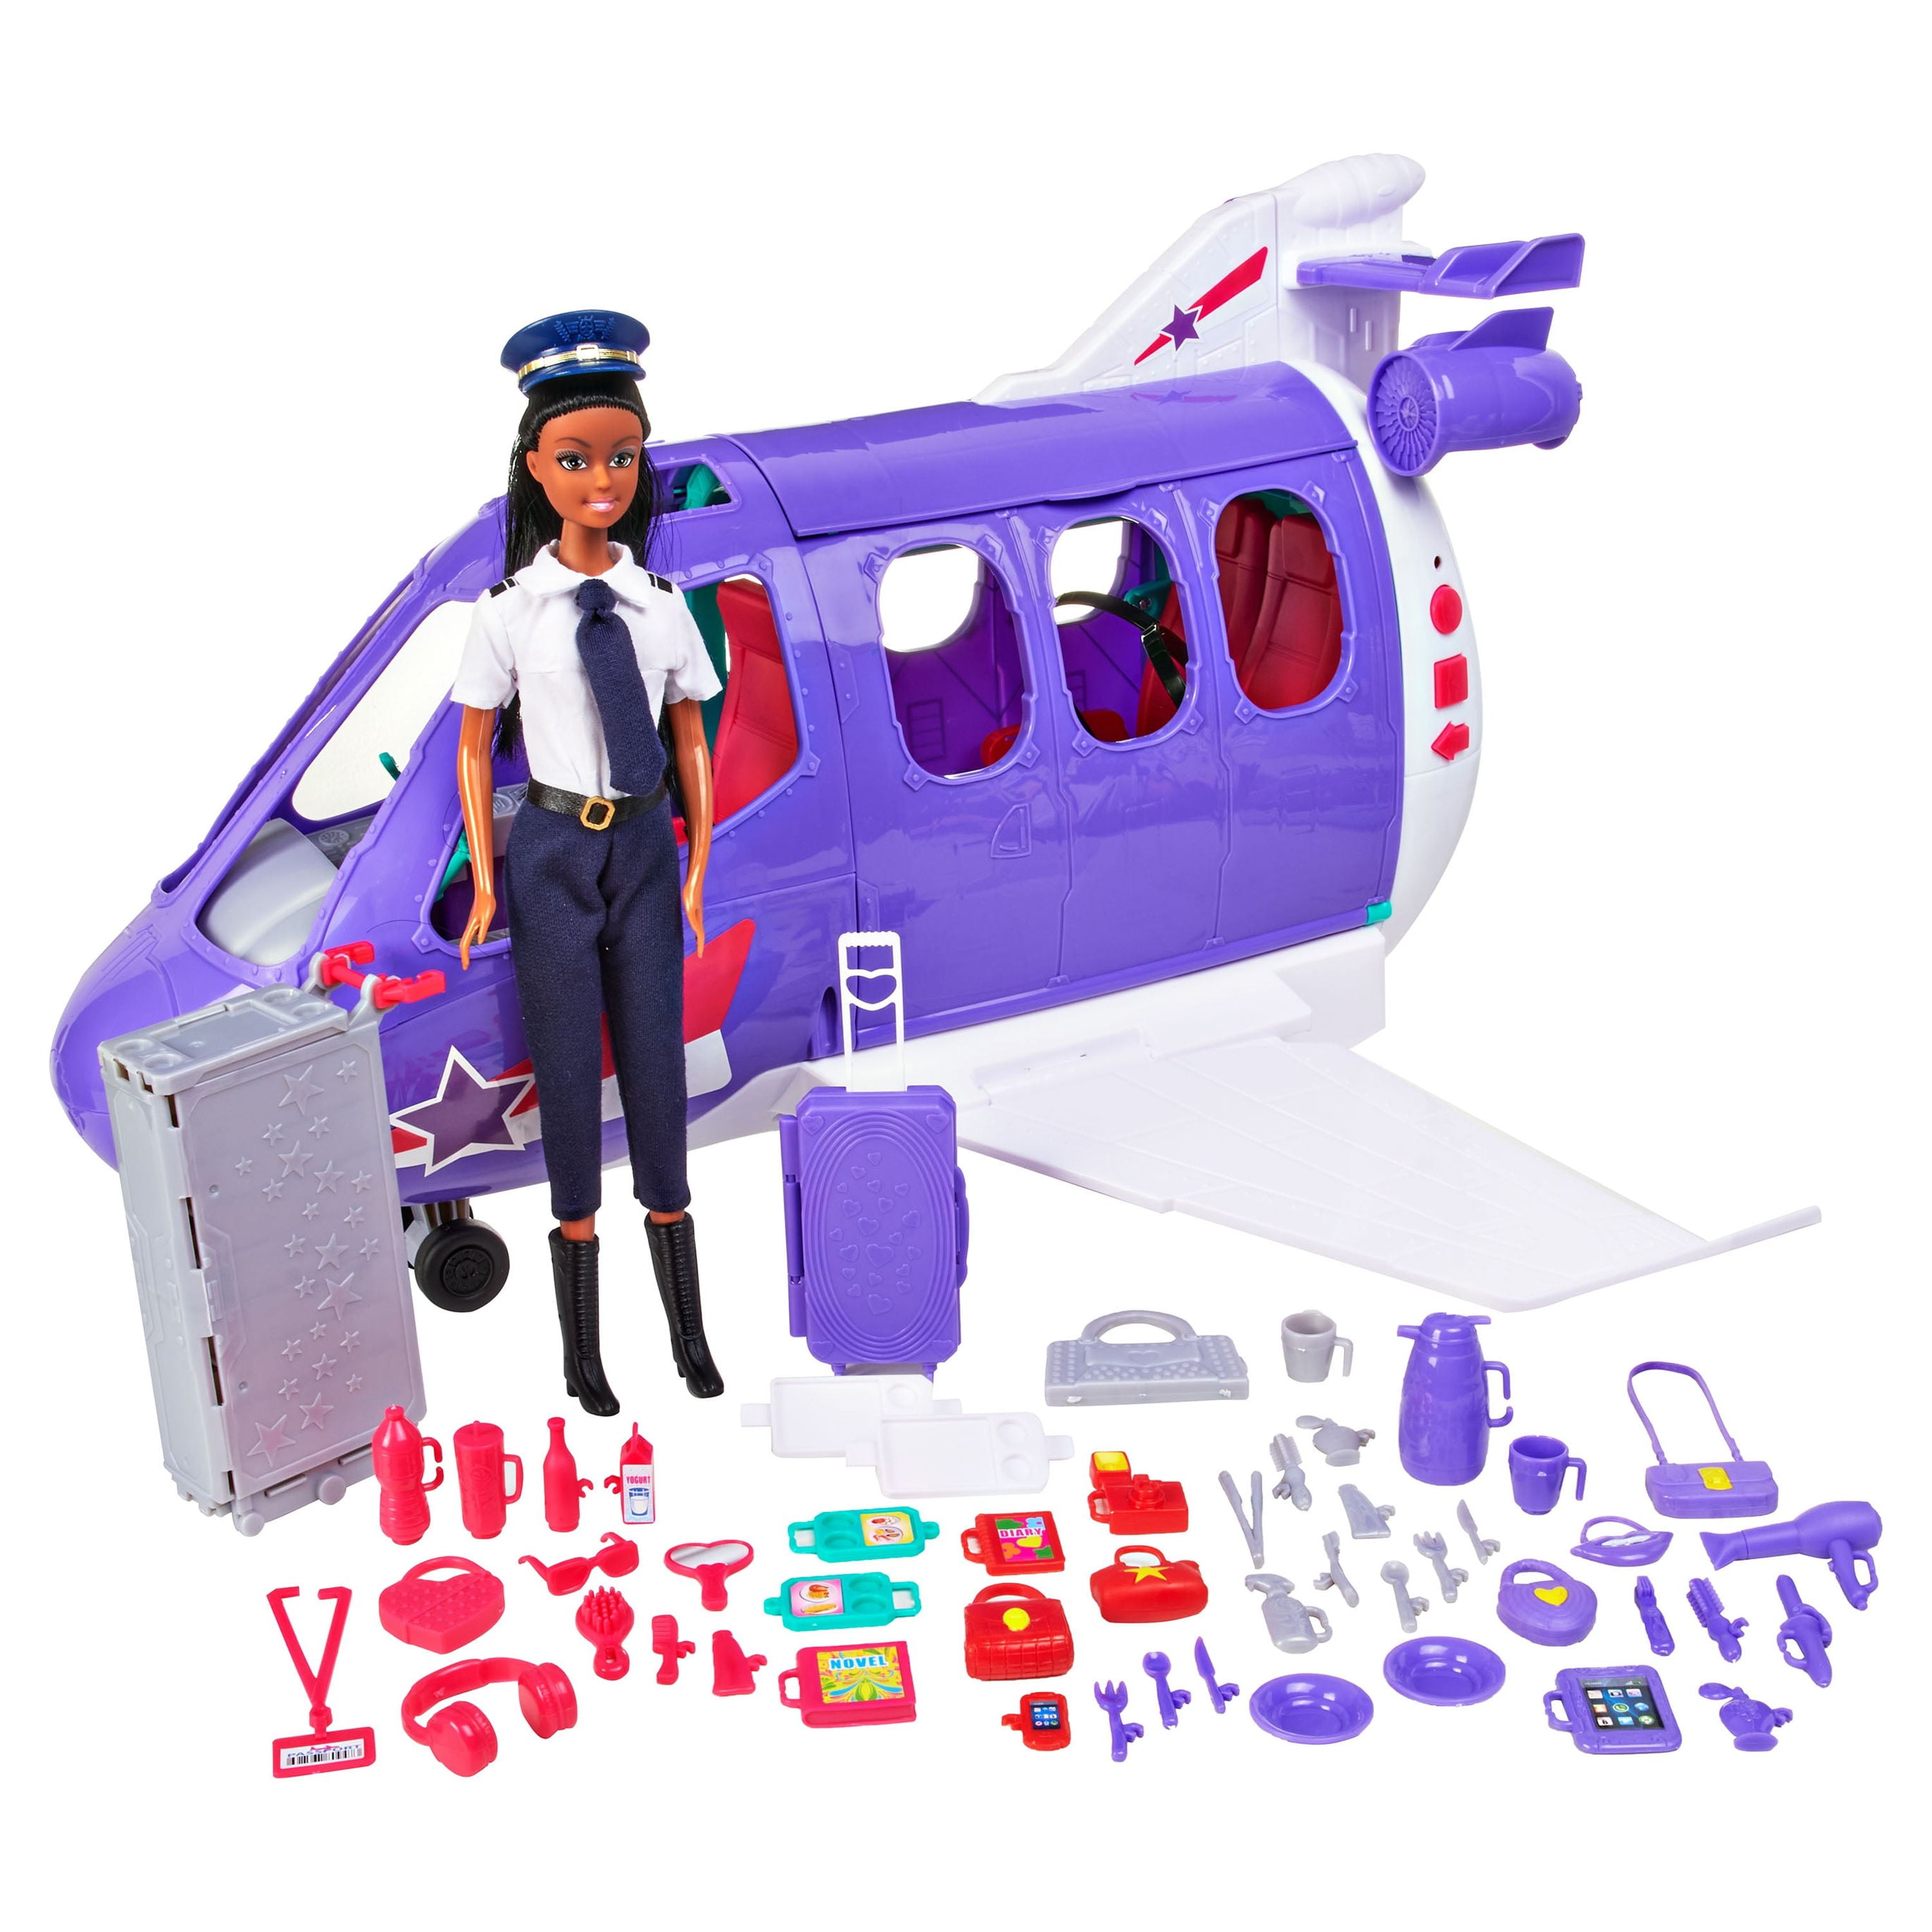 Barbie Airplane  Barbie toys, Barbie, Childhood toys